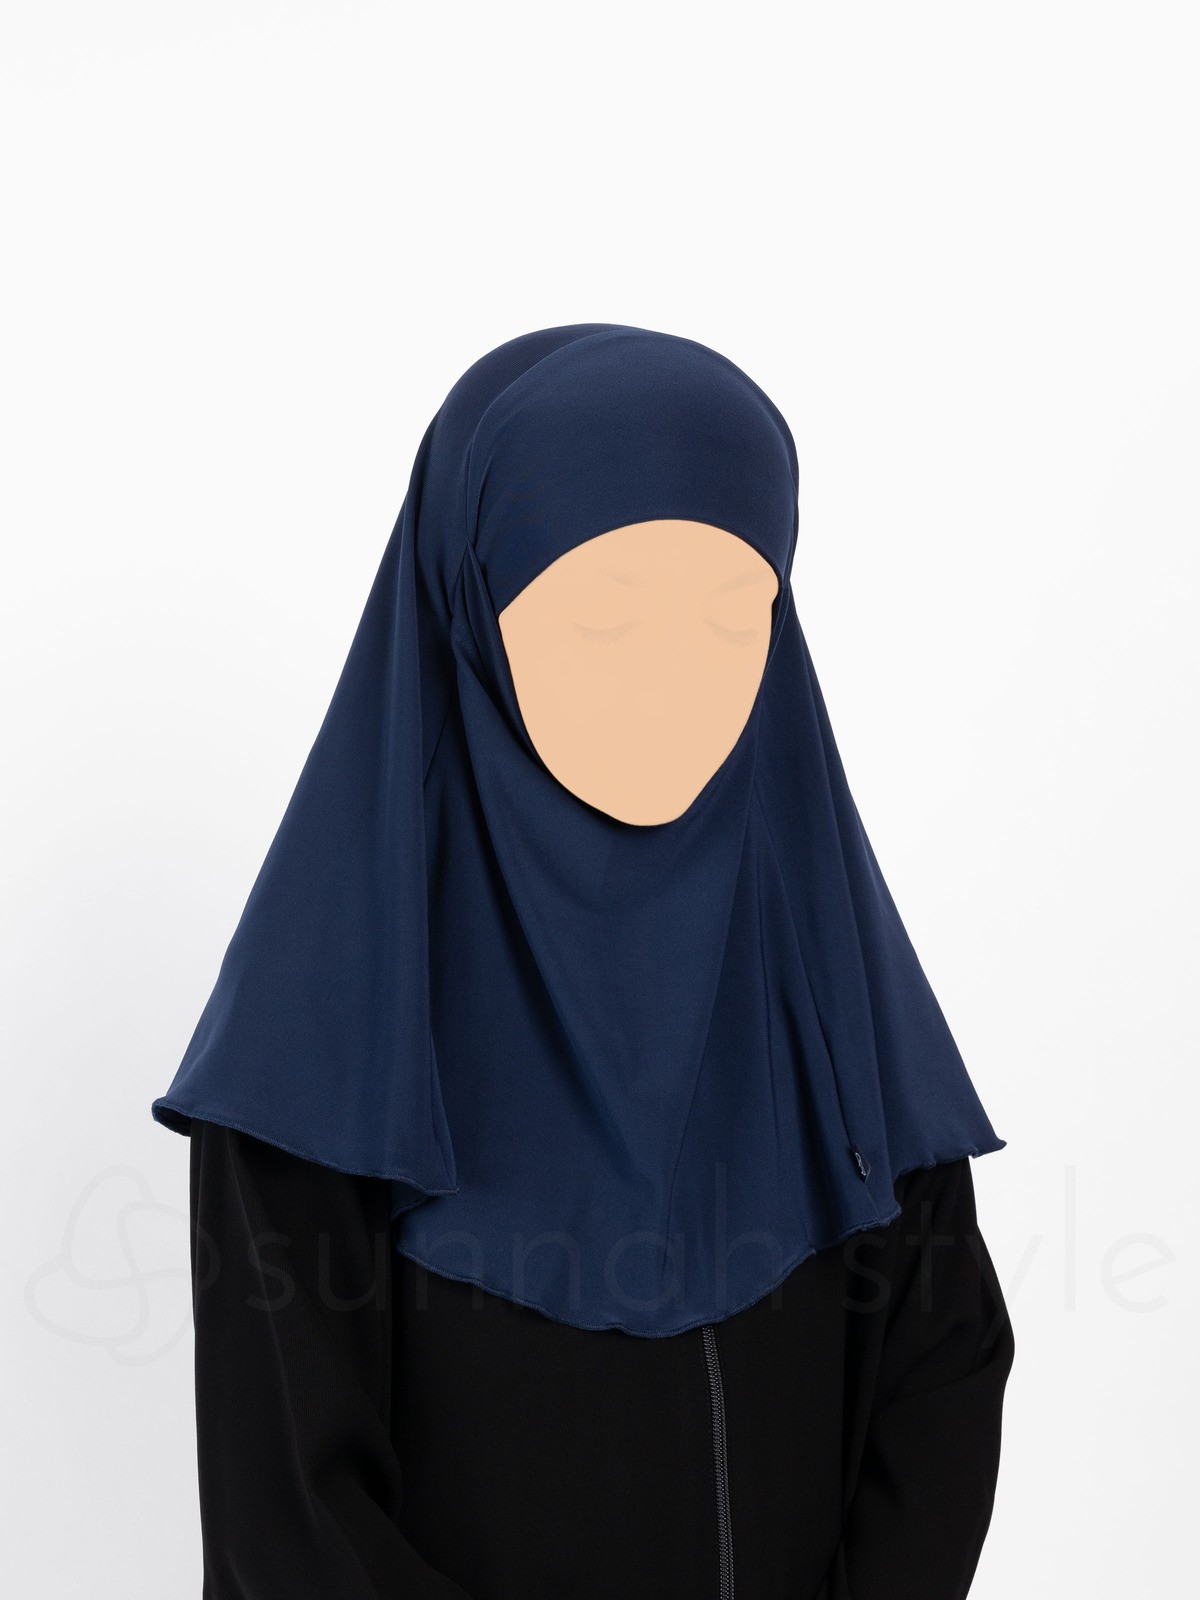 Sunnah Style - Girls Jersey Khimar (Navy Blue)